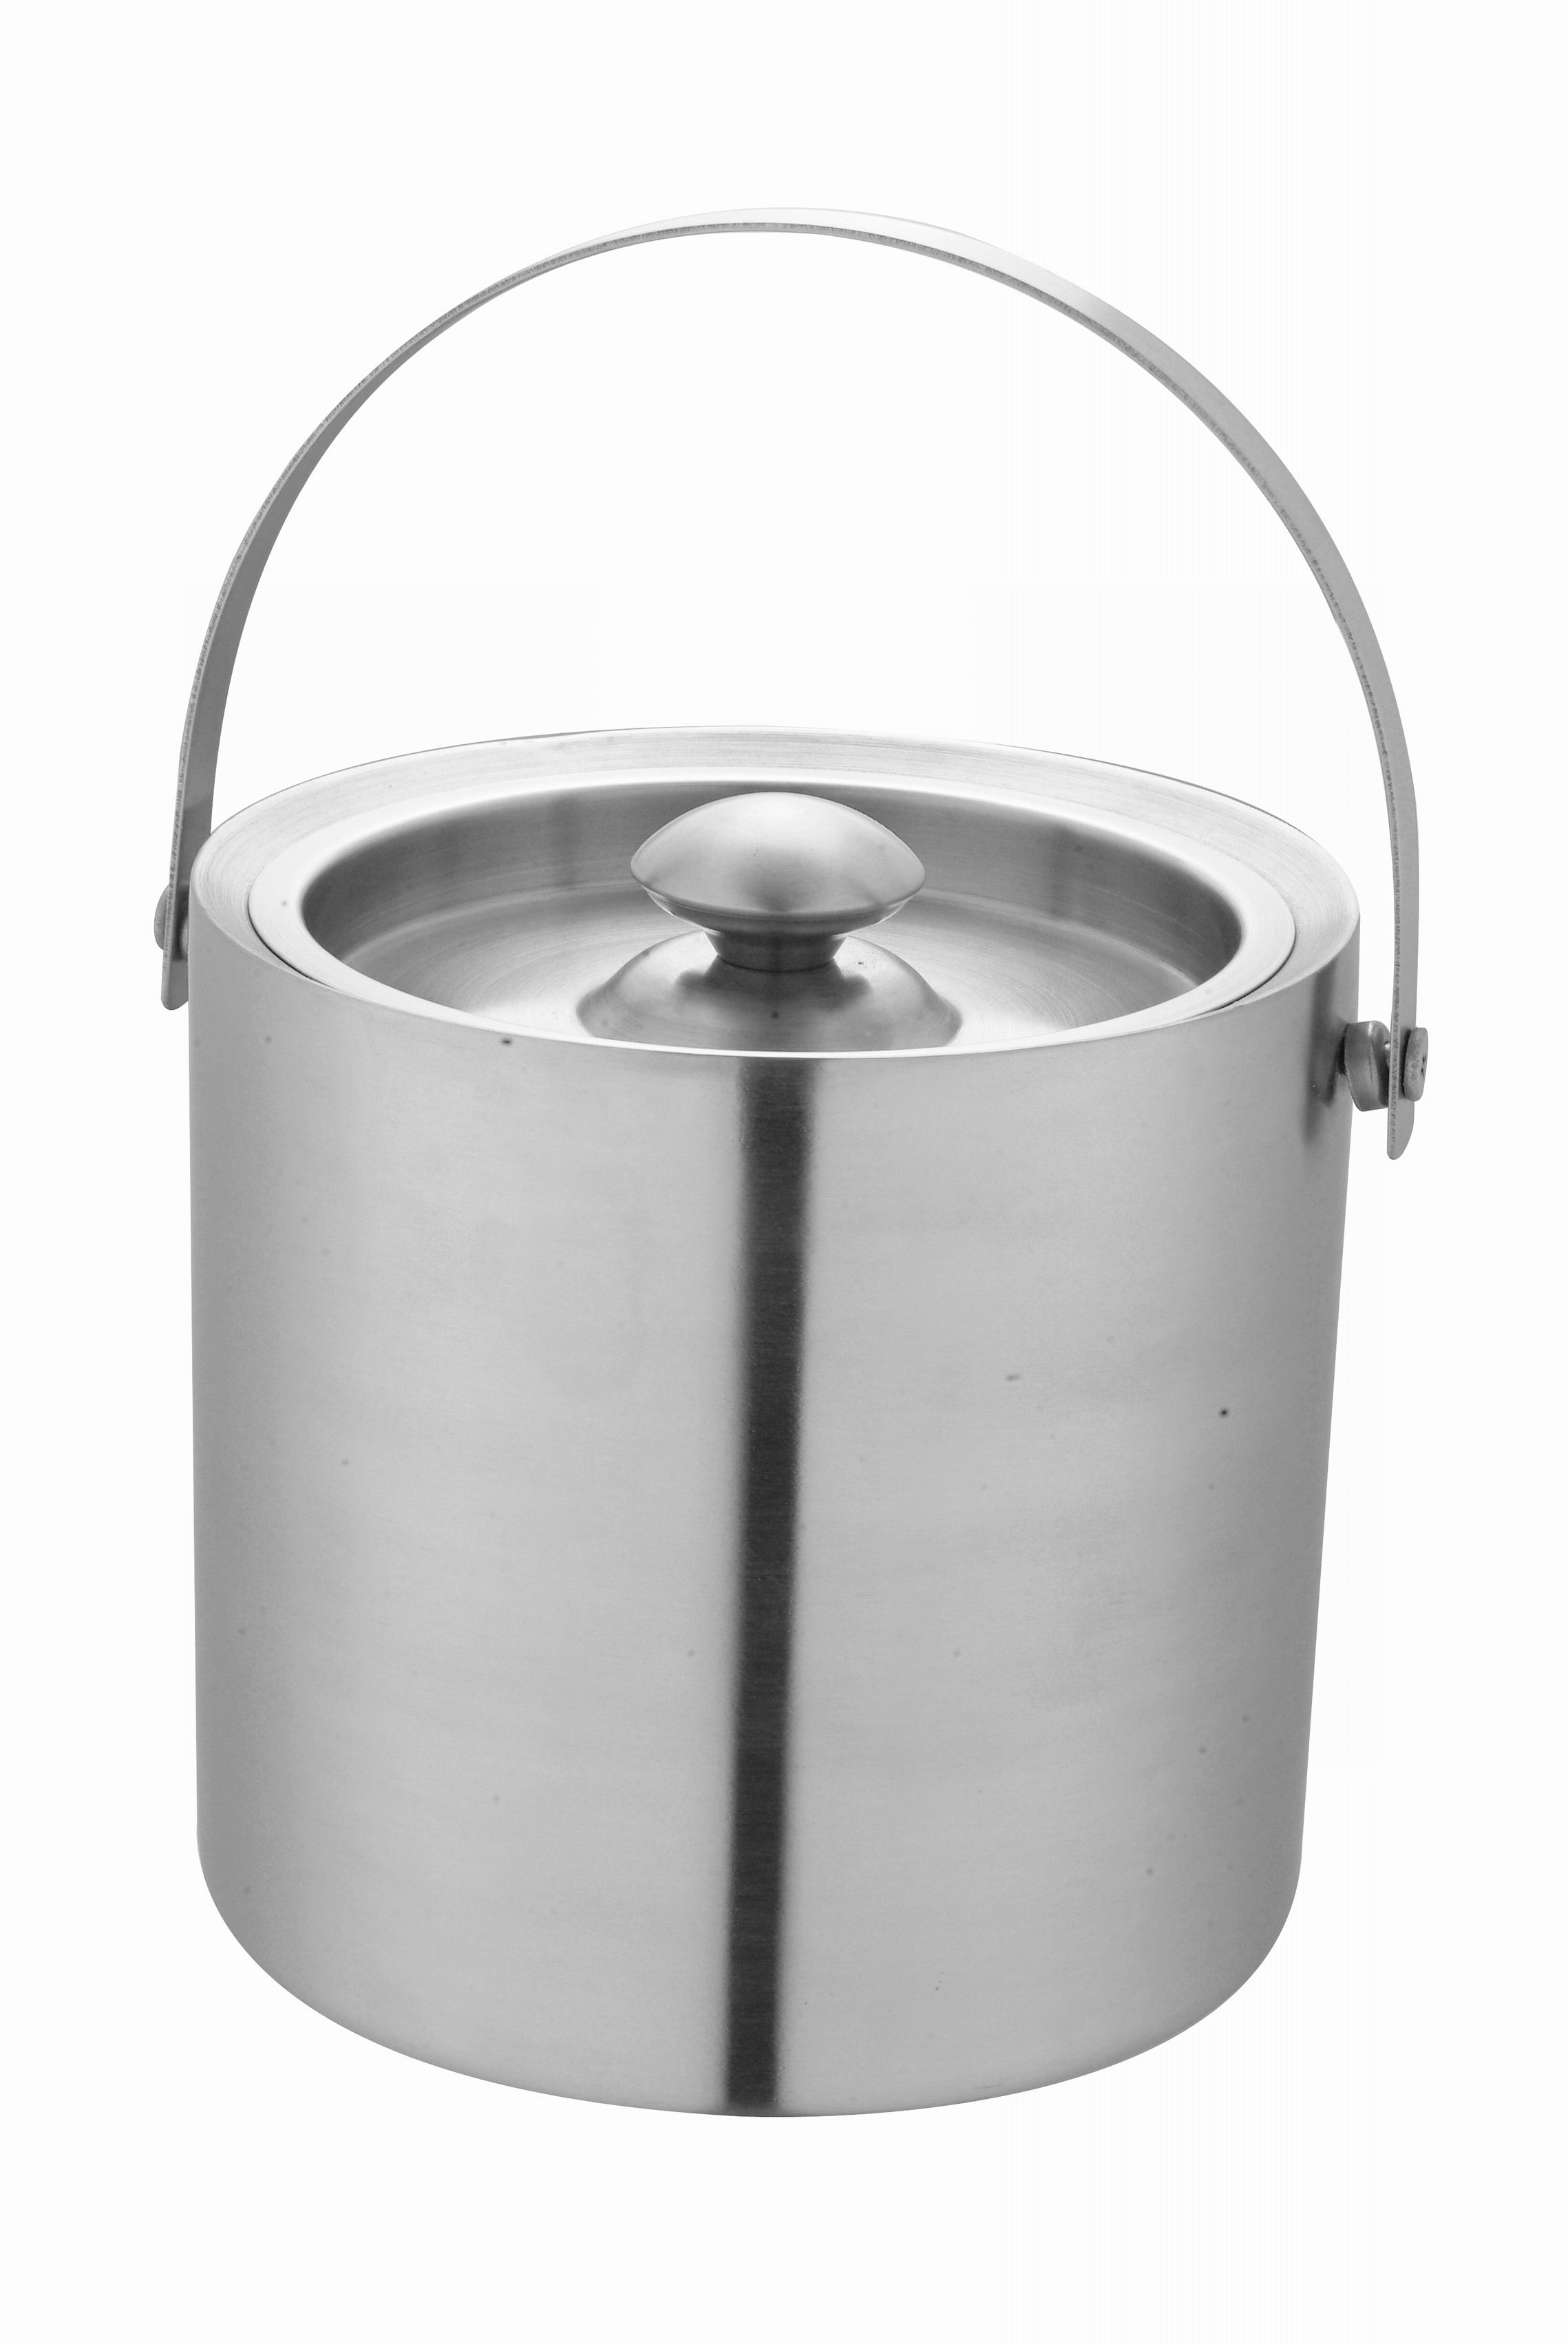 Premier Housewares Ice Bucket Stainless Steel Drinks Bucket Wine Cooler Bucket with Handle Ice Bucket for Home Bar Ice Bucket with Lid 16 x 17 x 16